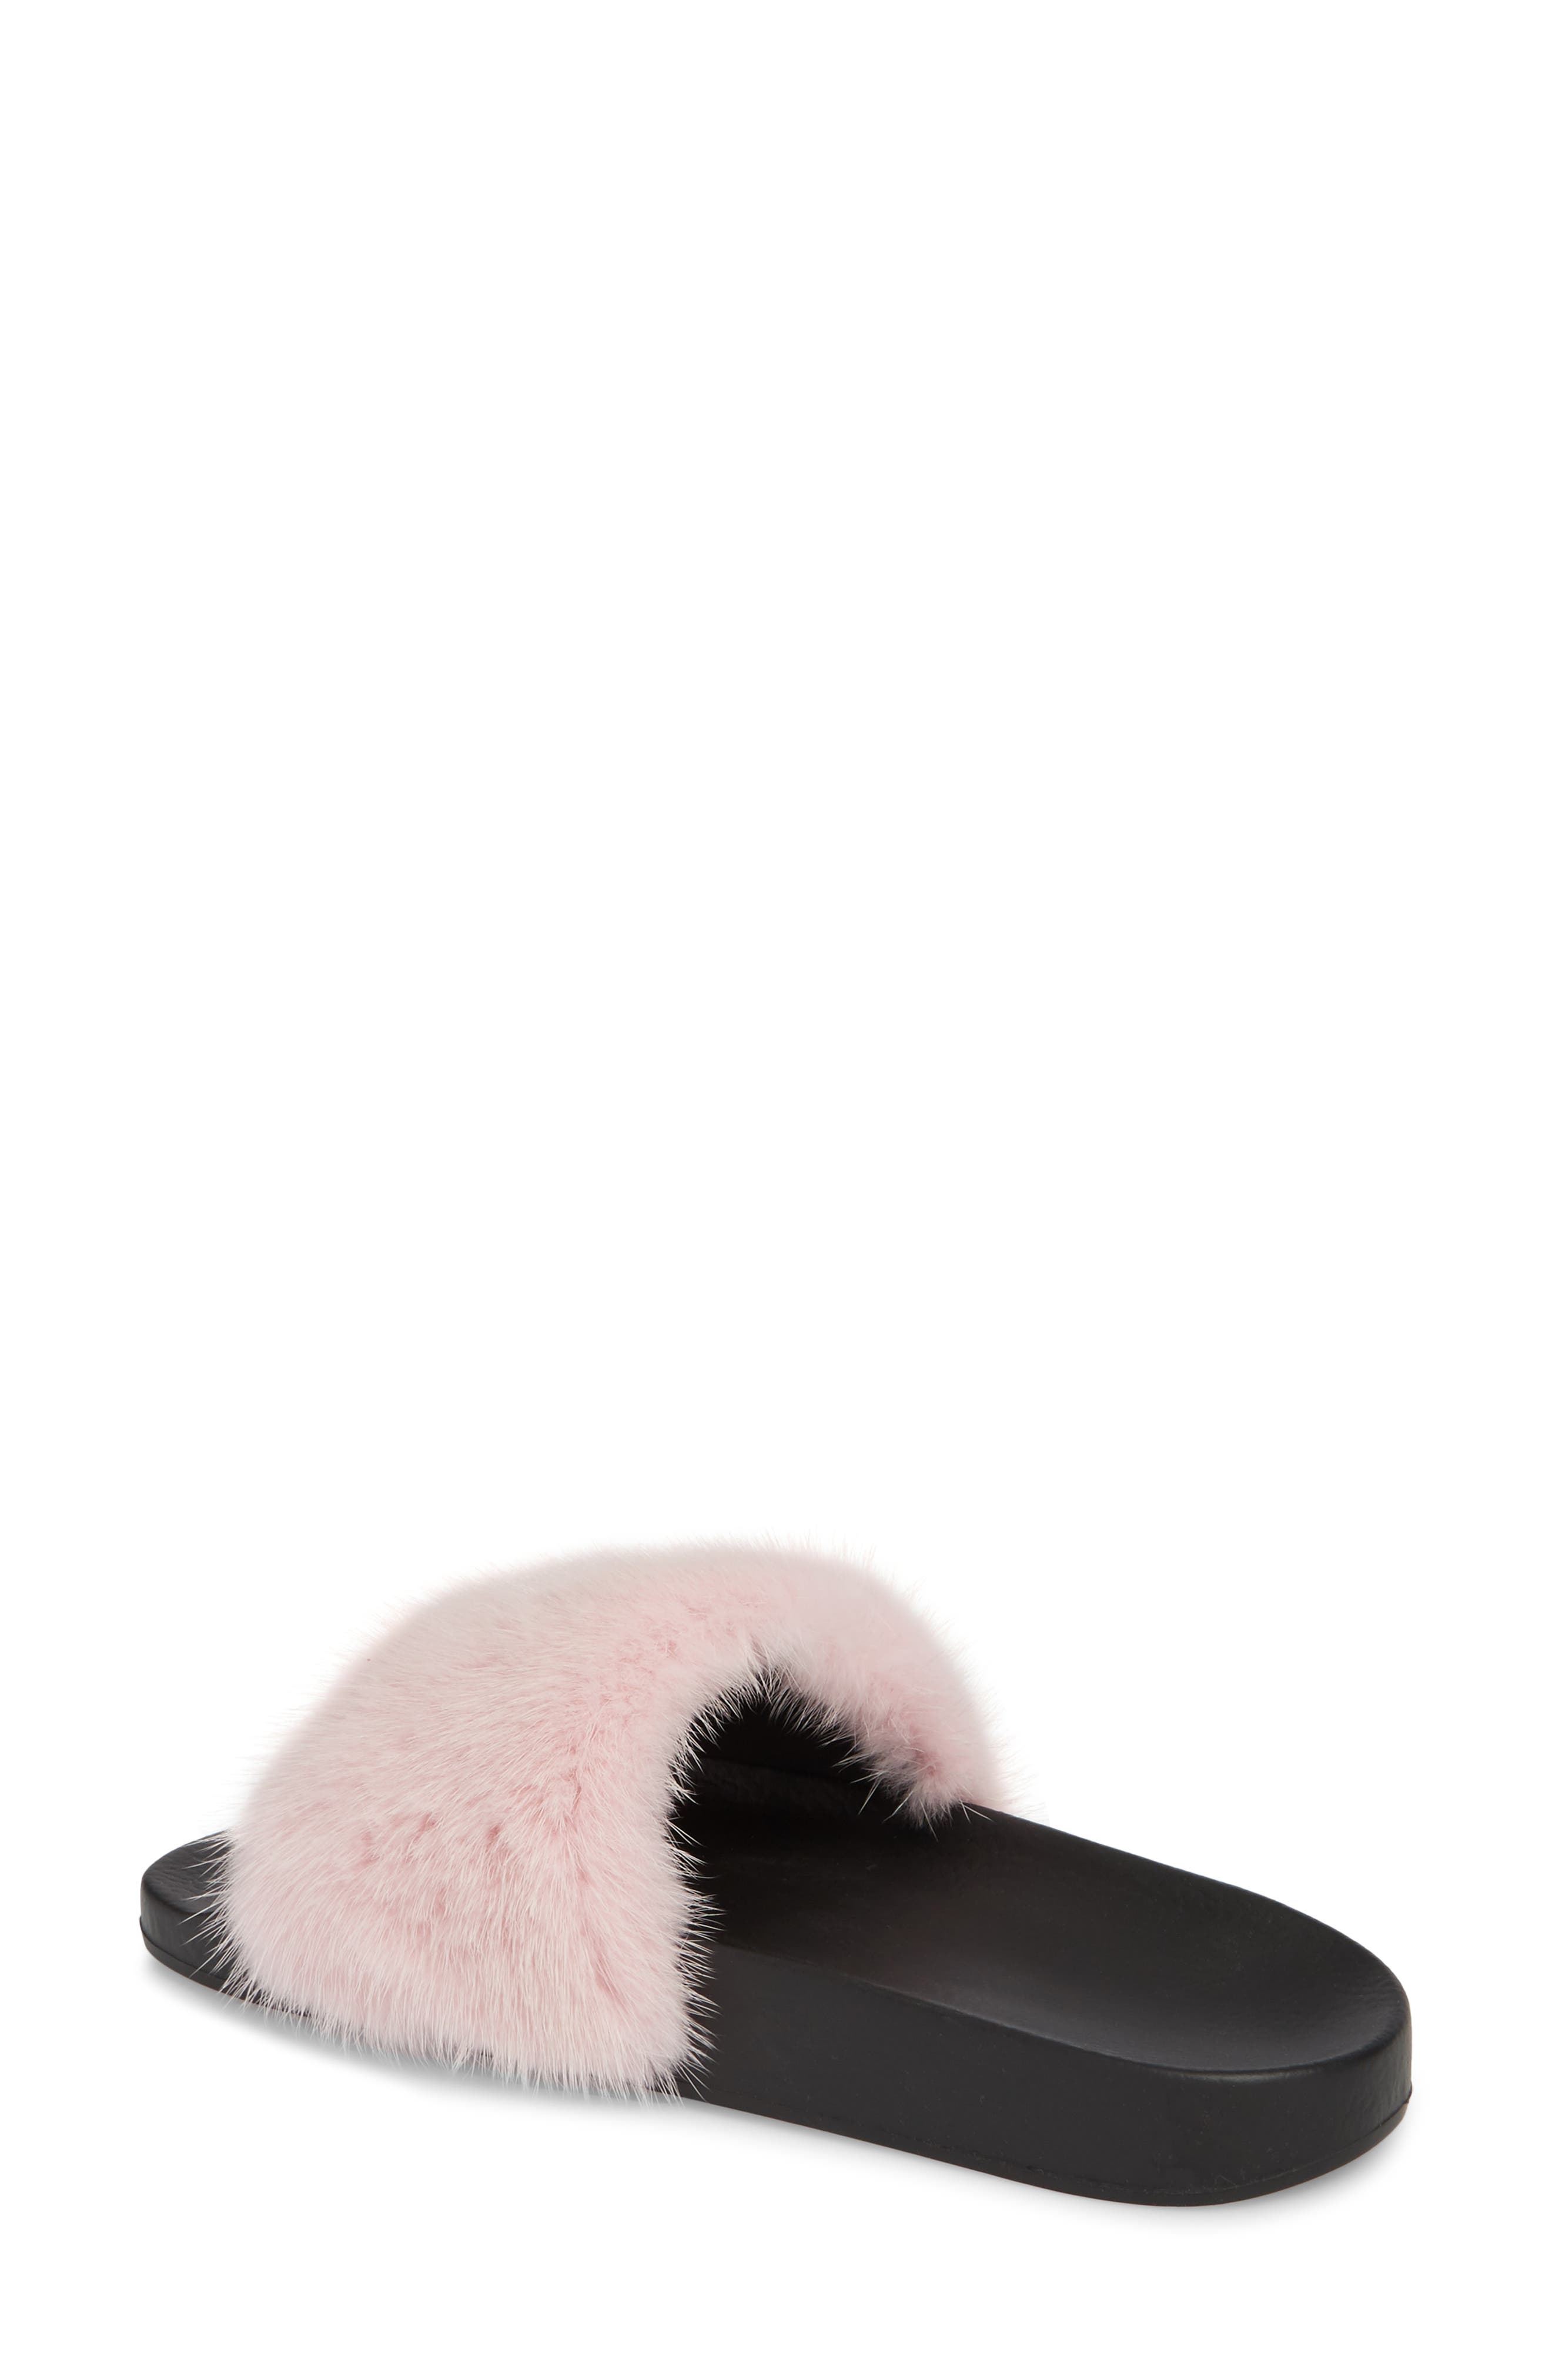 GIVENCHY Mink Fur & Rubber Slide Sandal, Fuchsia in Fuschia | ModeSens